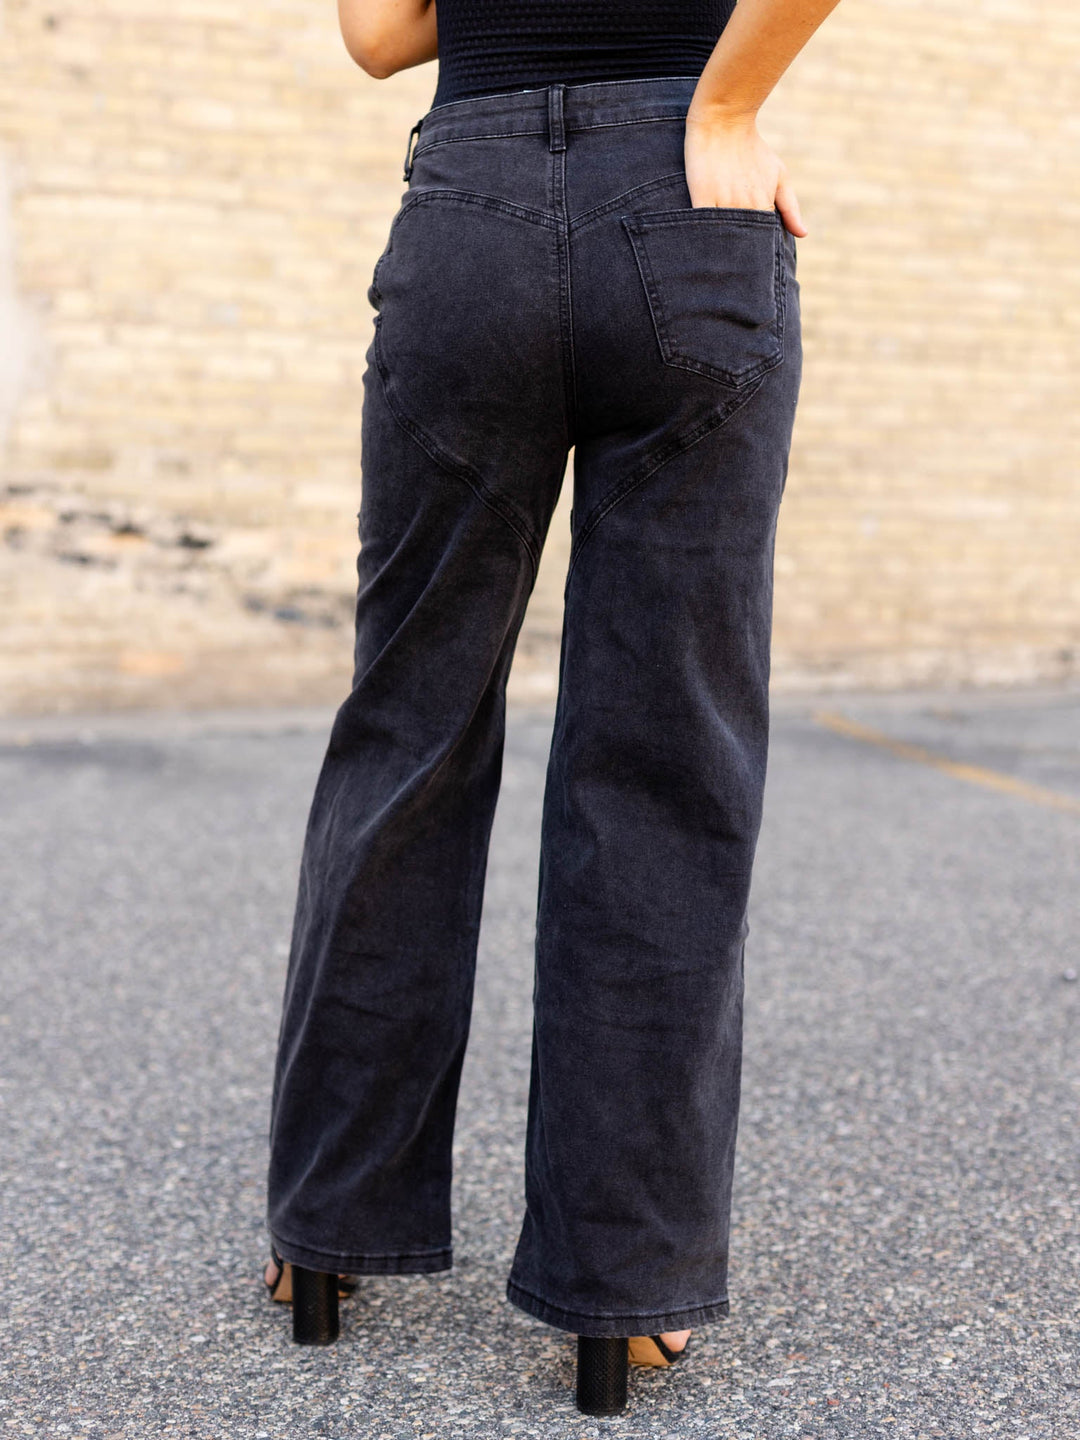 Rhinestone JeanDenim jeans